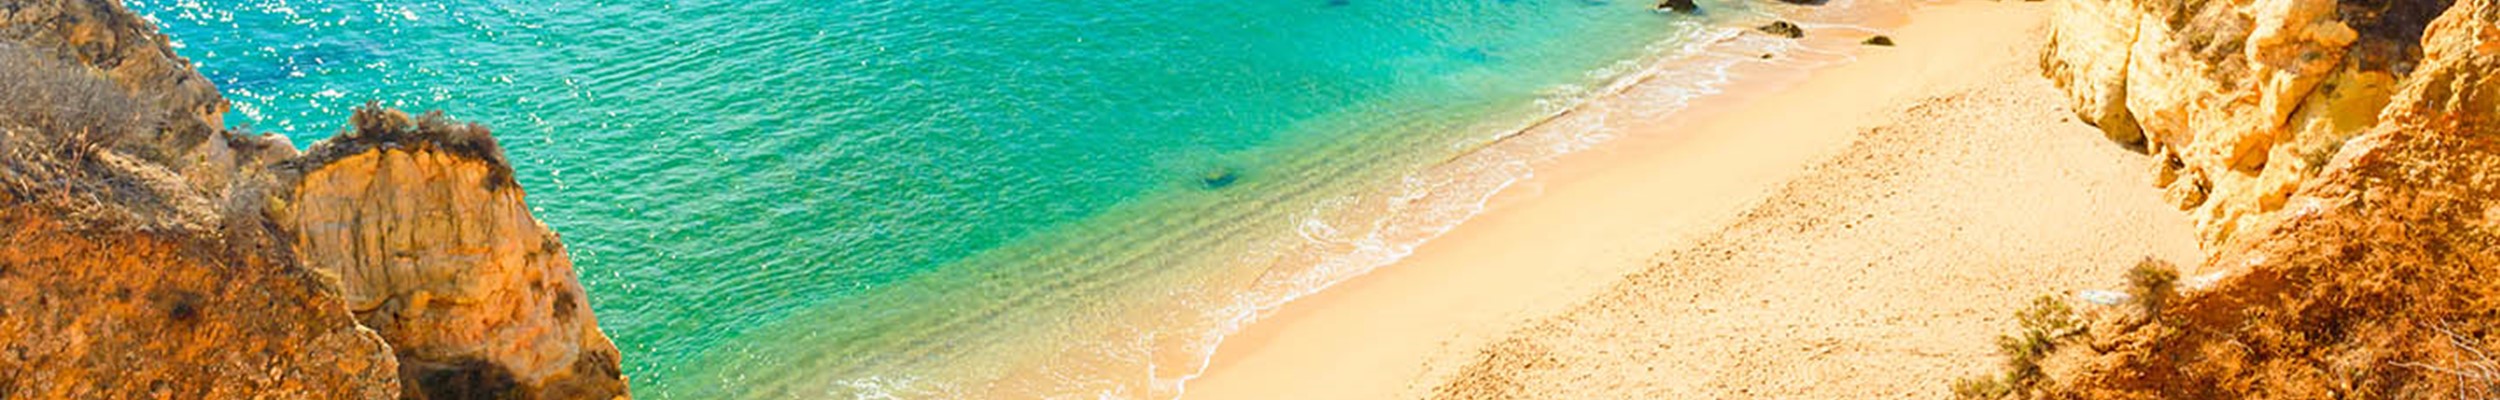 Portuguese beach and blue sea